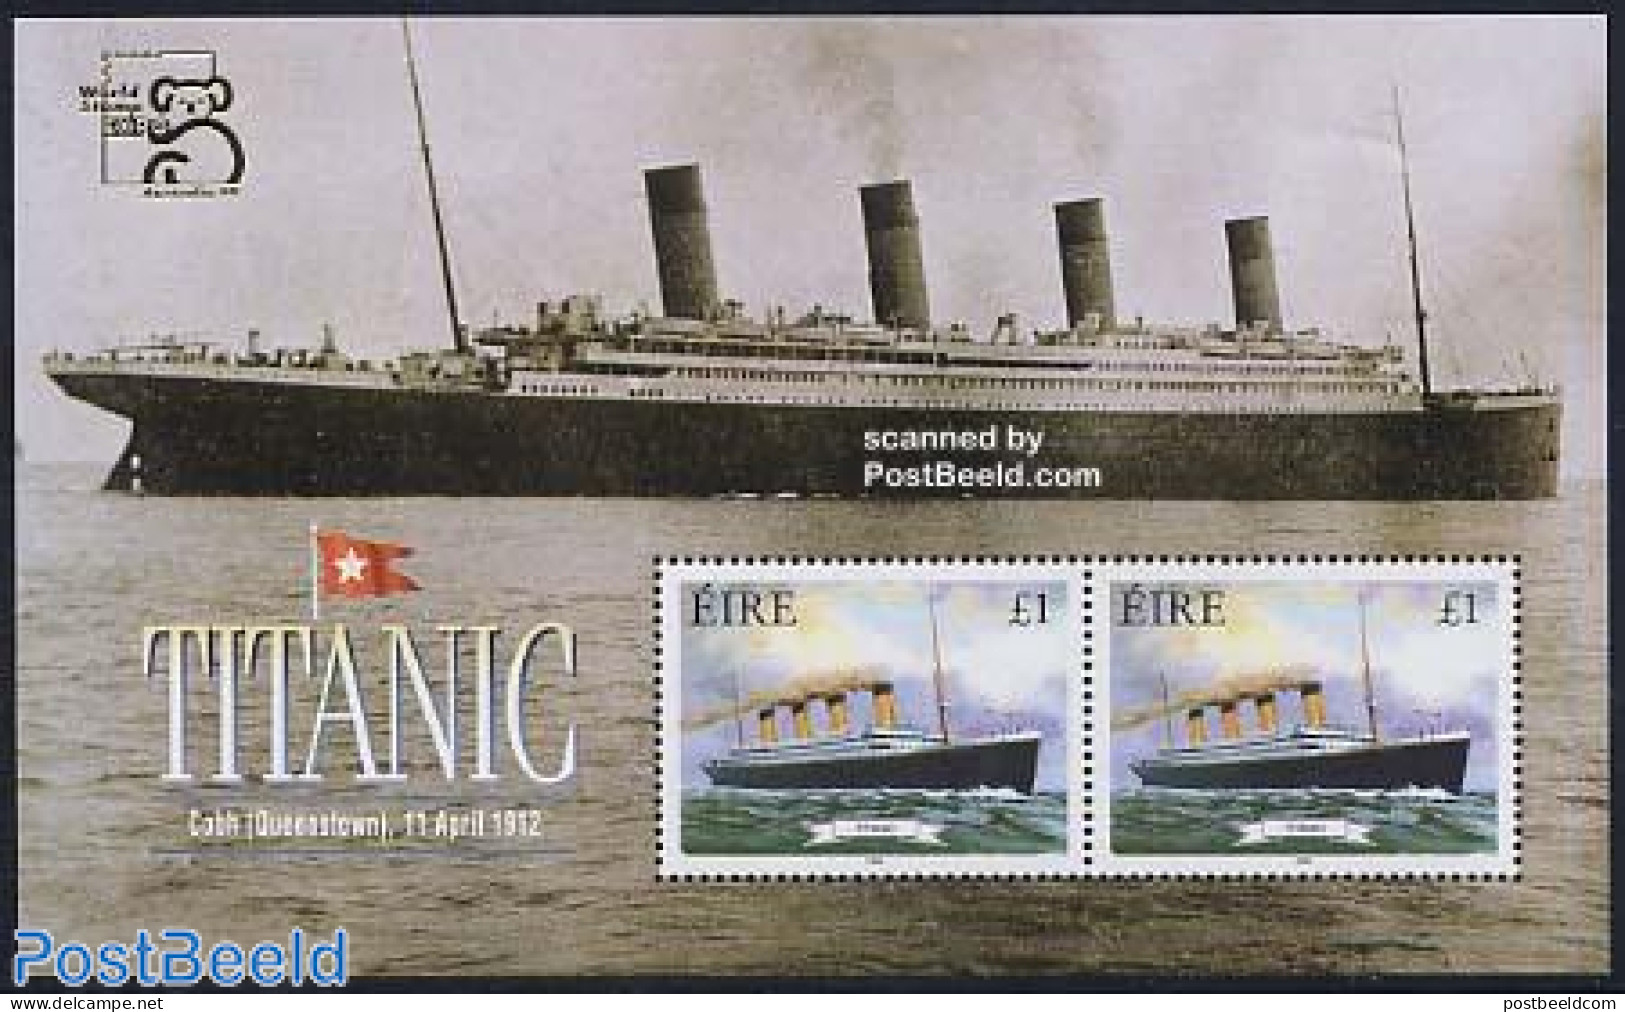 Ireland 1999 Australia 99 S/s, Mint NH, Transport - Philately - Ships And Boats - Titanic - Nuevos